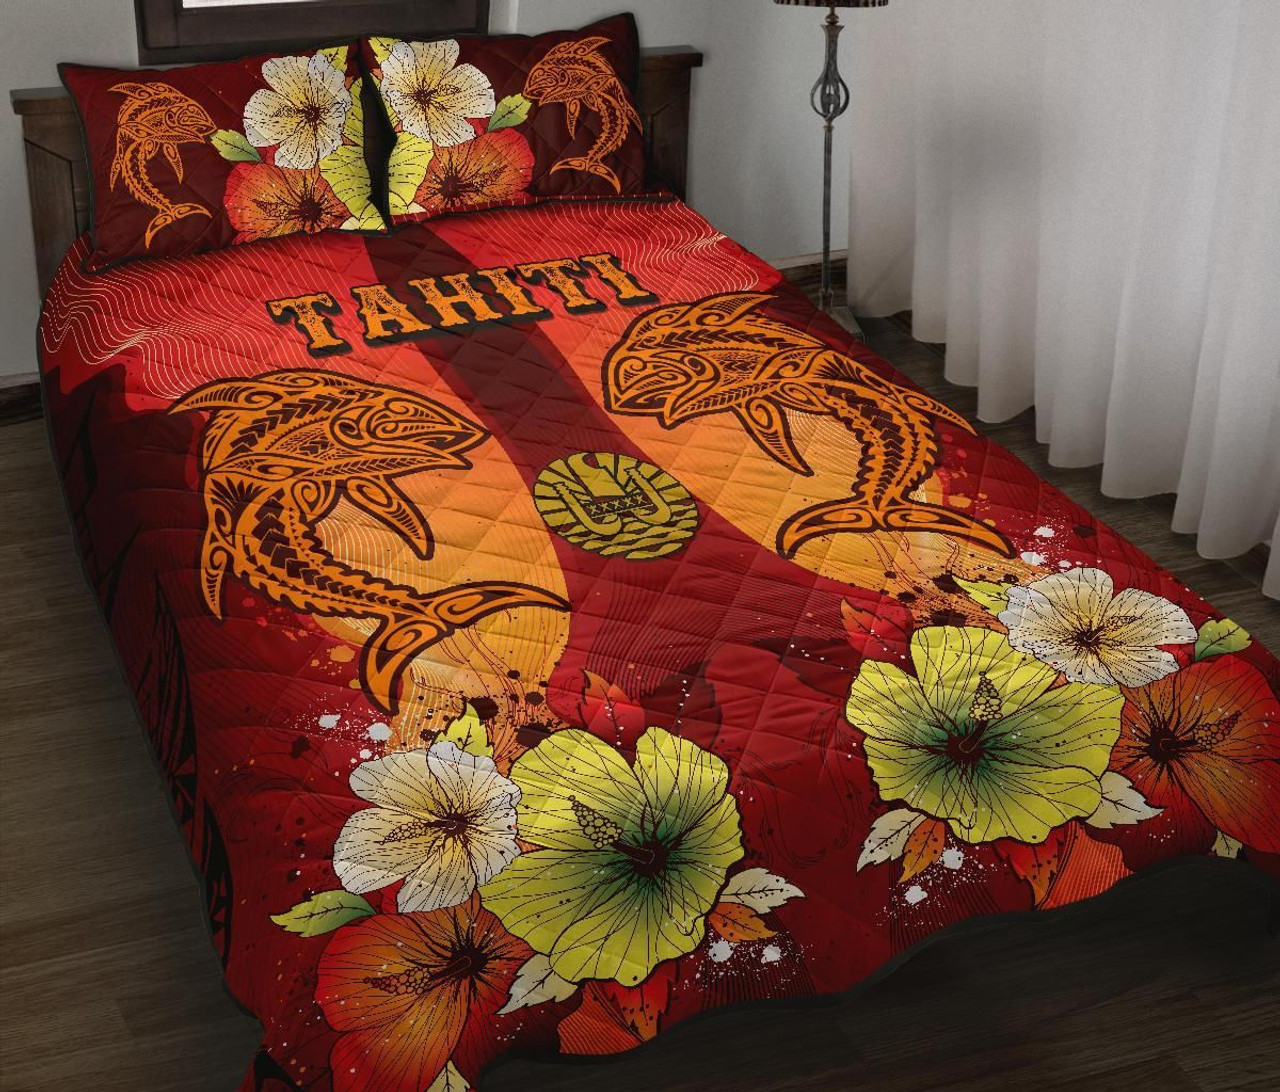 Tahiti Quilt Bed Sets - Tribal Tuna Fish 5